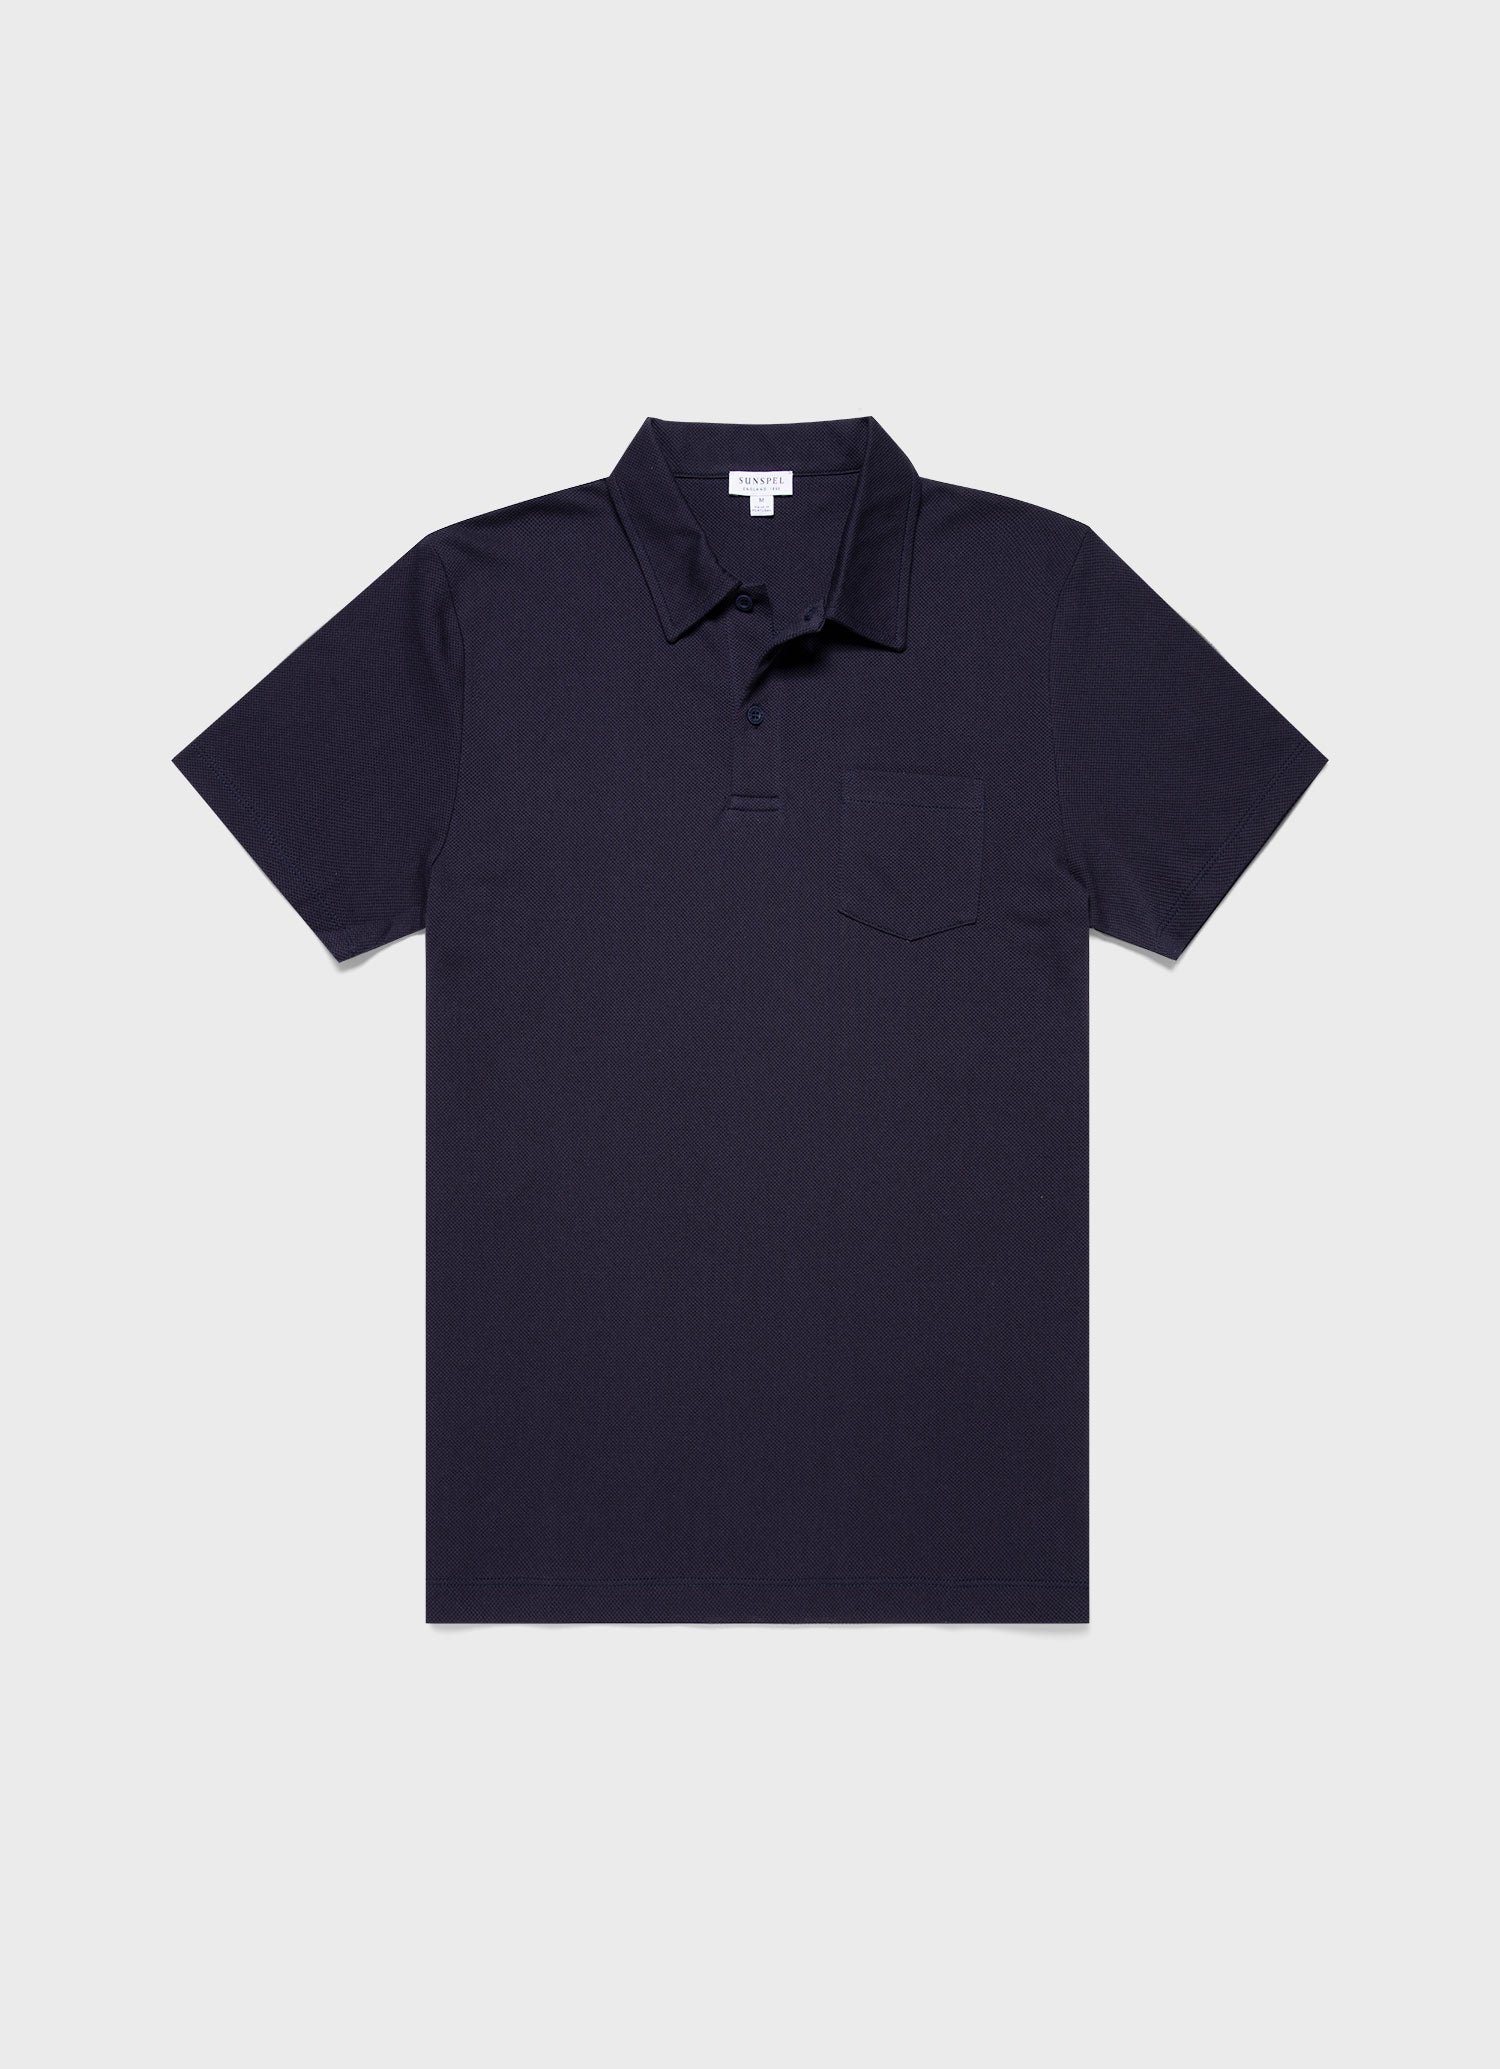 Sunspel - Short Sleeve Riviera Polo Shirt Navy - S